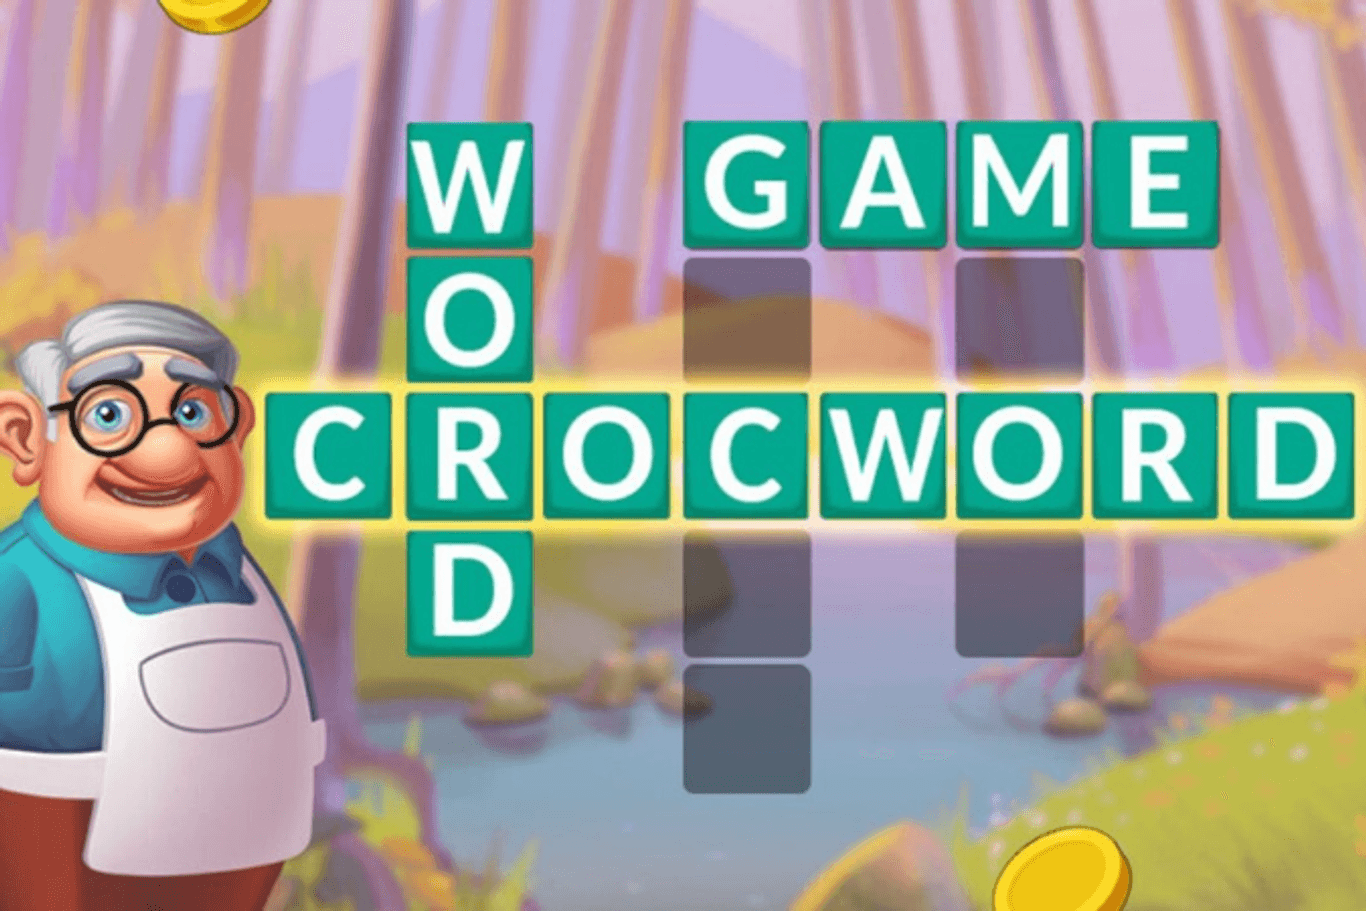 Crocword Crossword Puzzle (Quelle GamesDistribution)